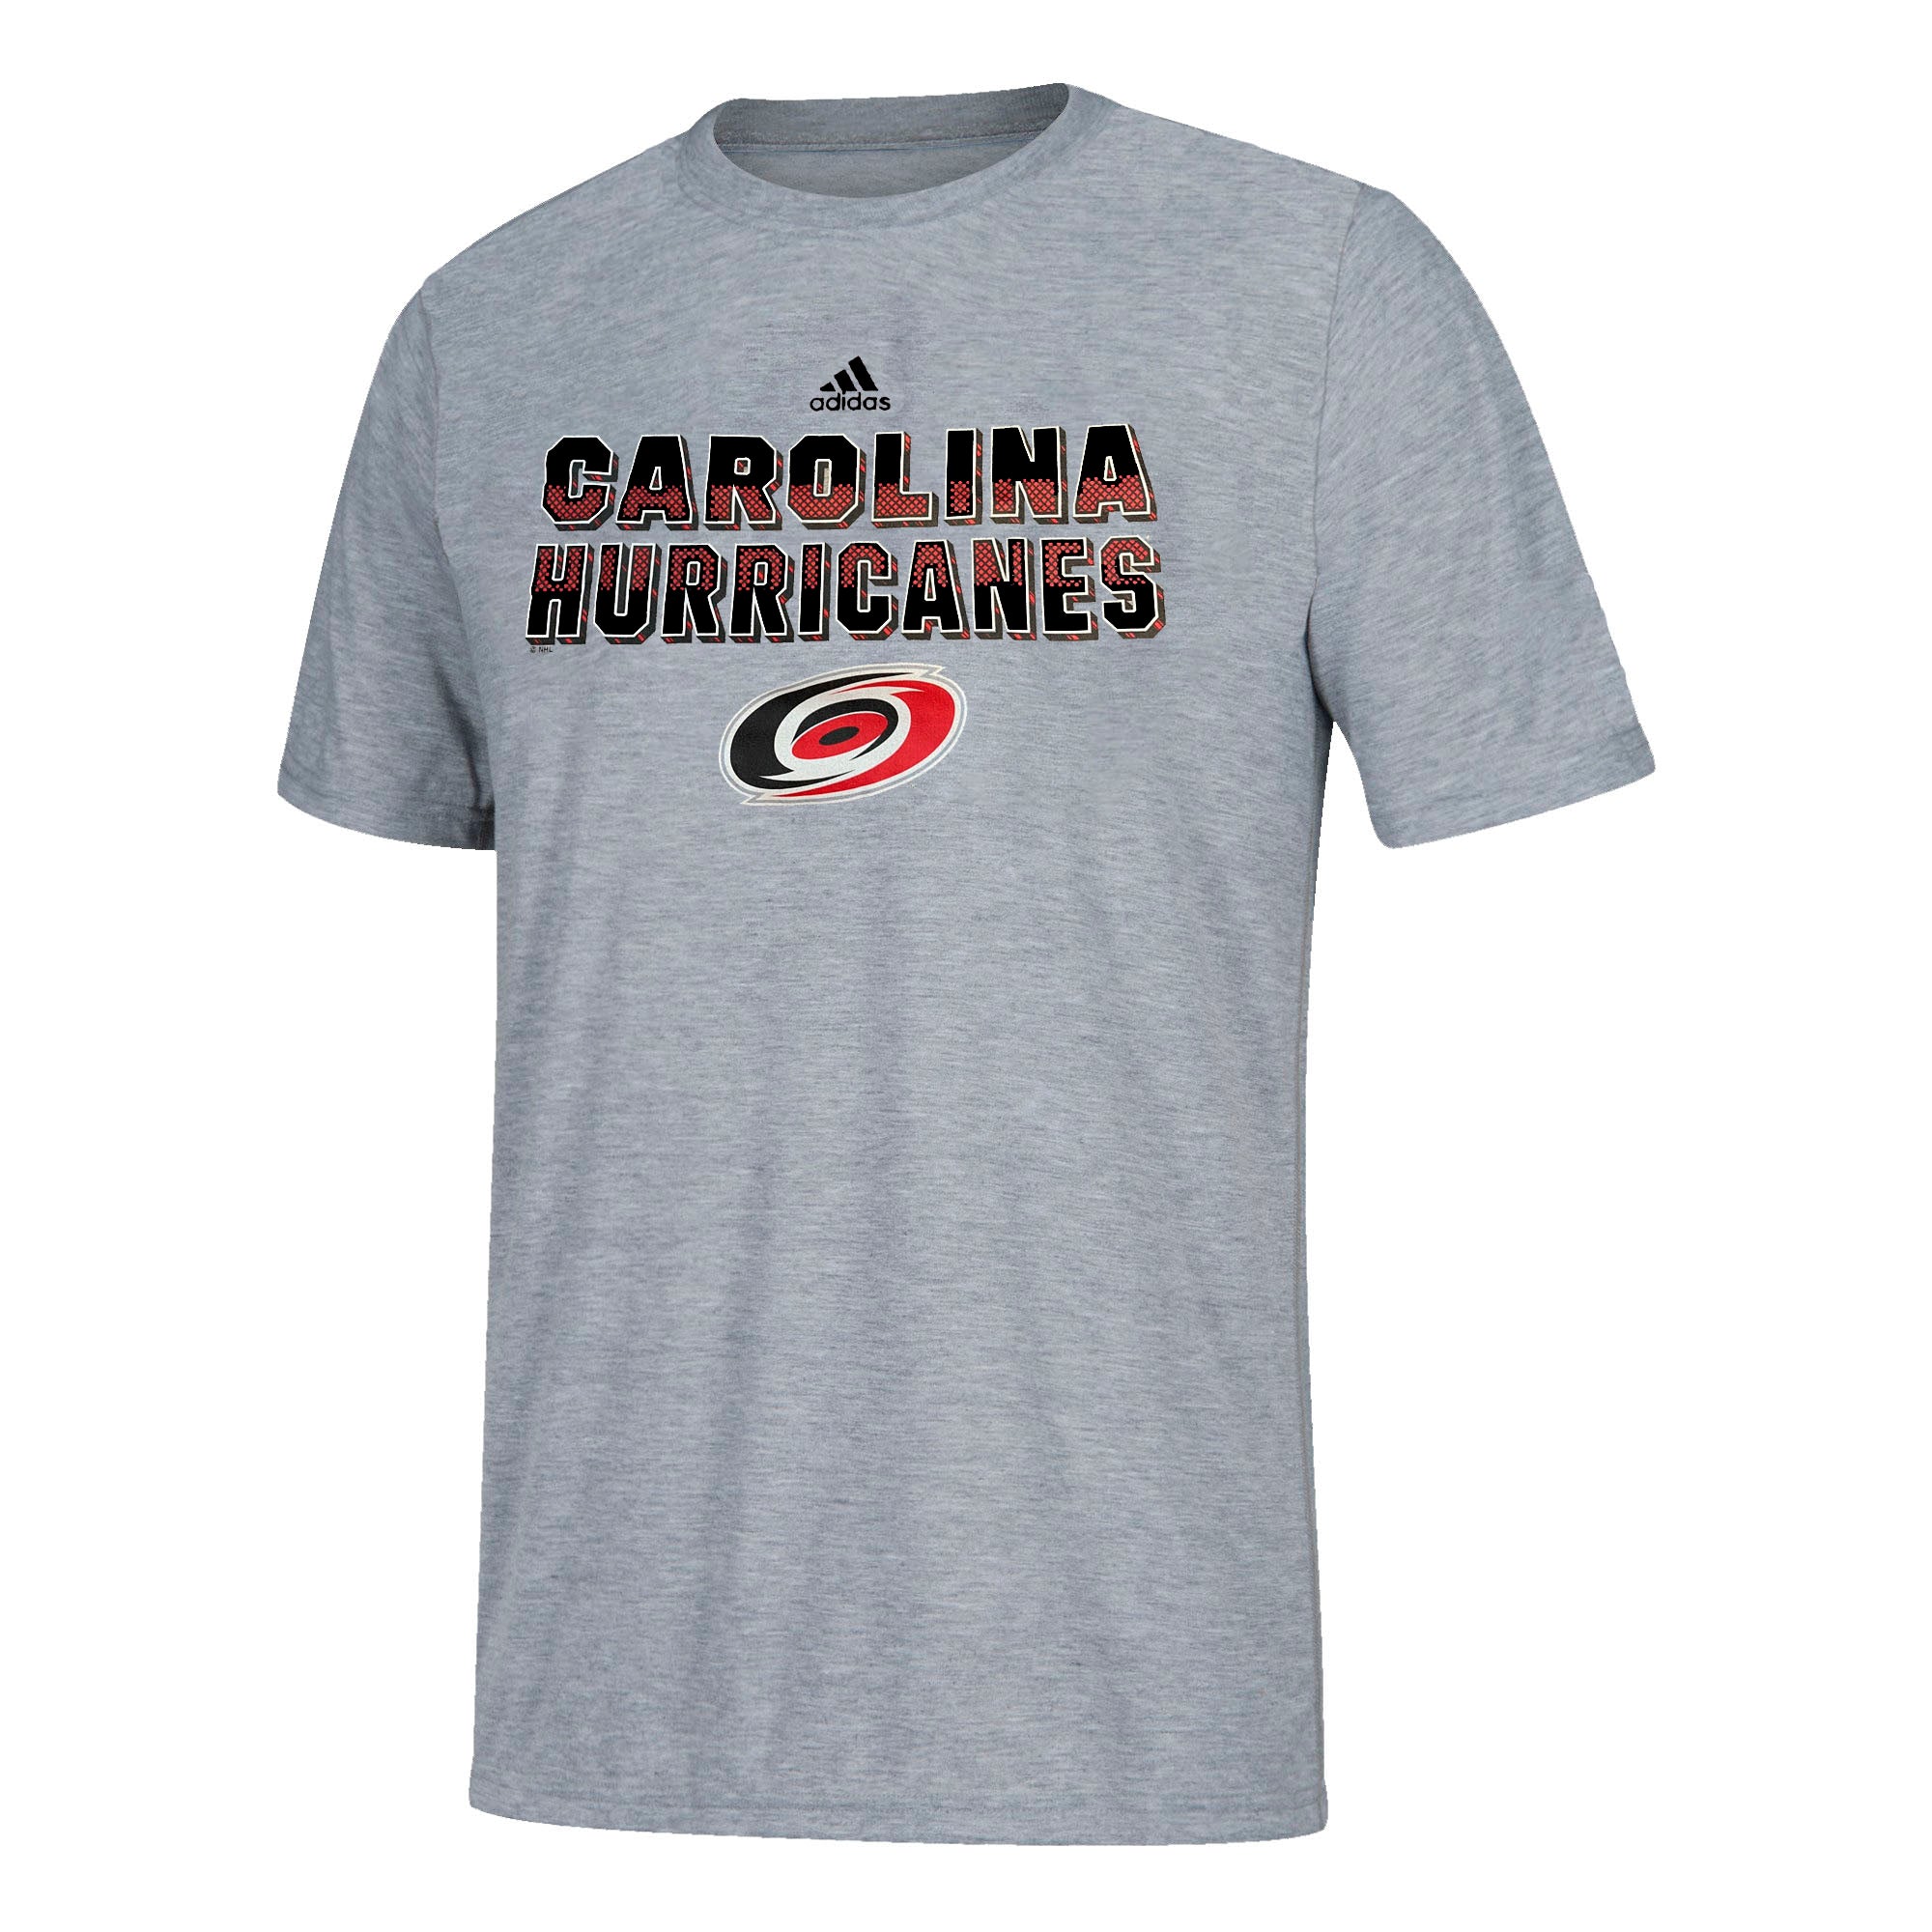 Carolina Hurricanes Adidas Amplifier T-Shirt